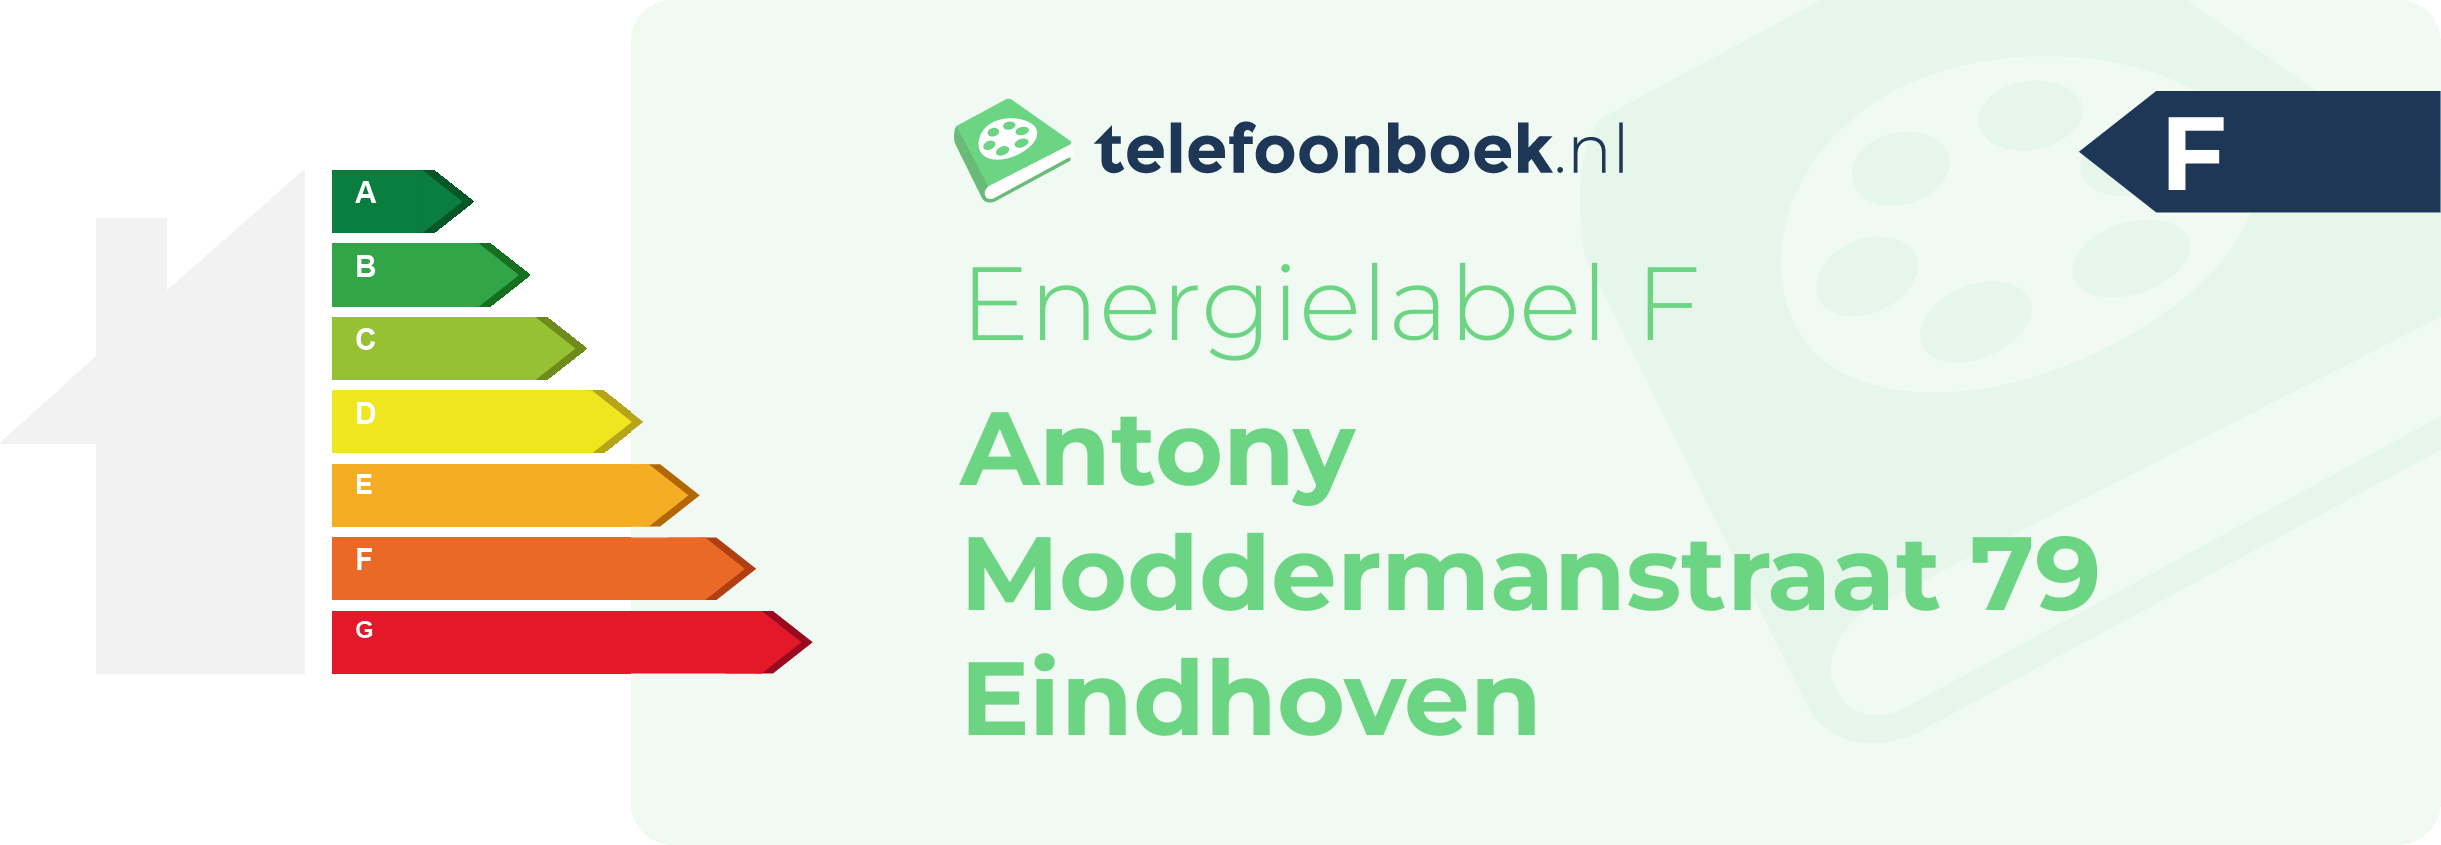 Energielabel Antony Moddermanstraat 79 Eindhoven